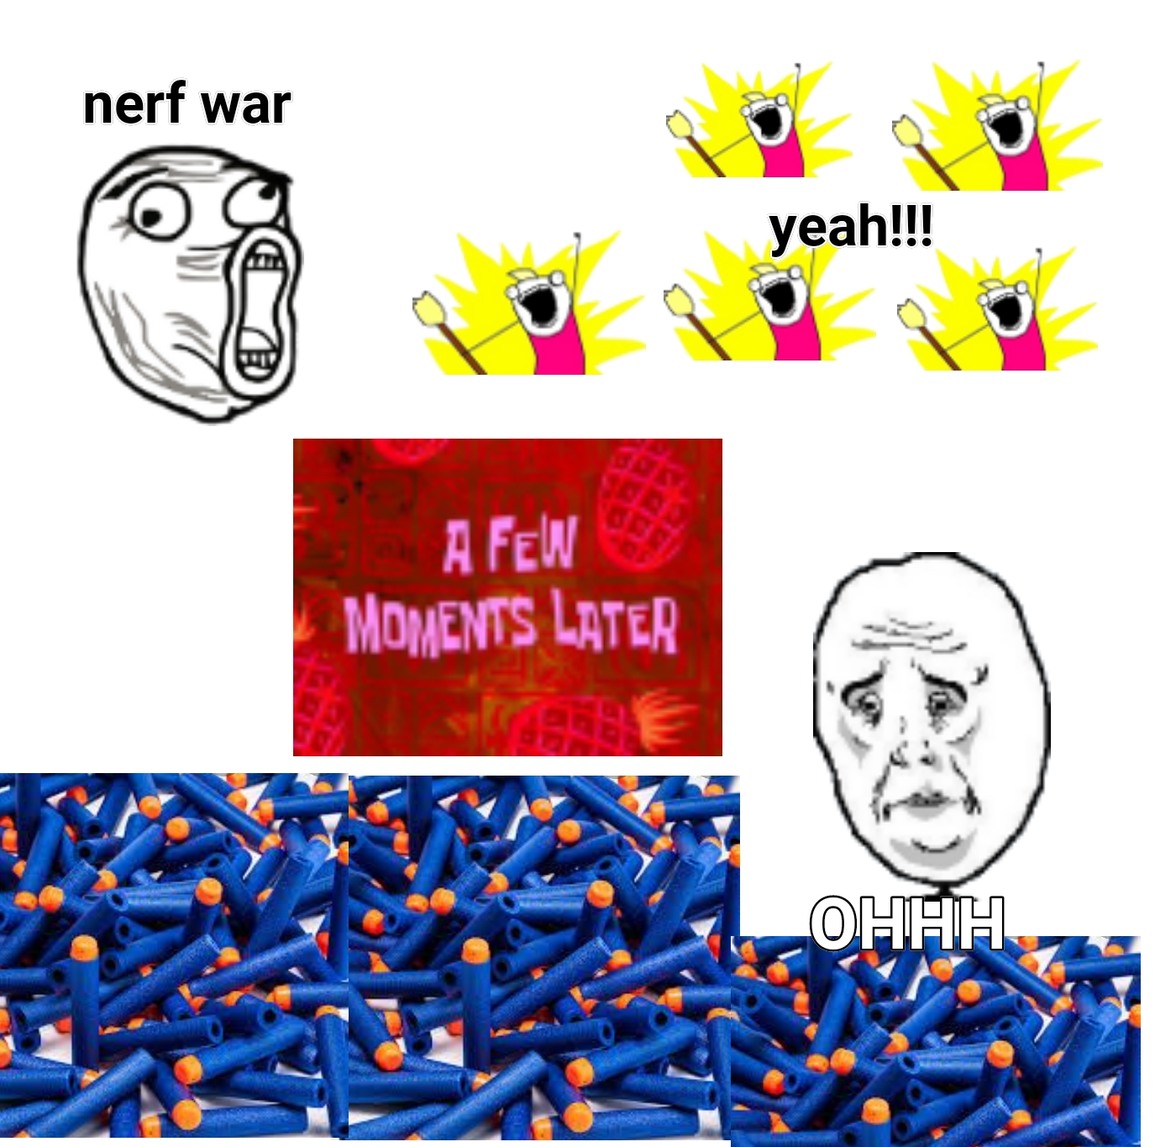 Nerf war aftermath - meme